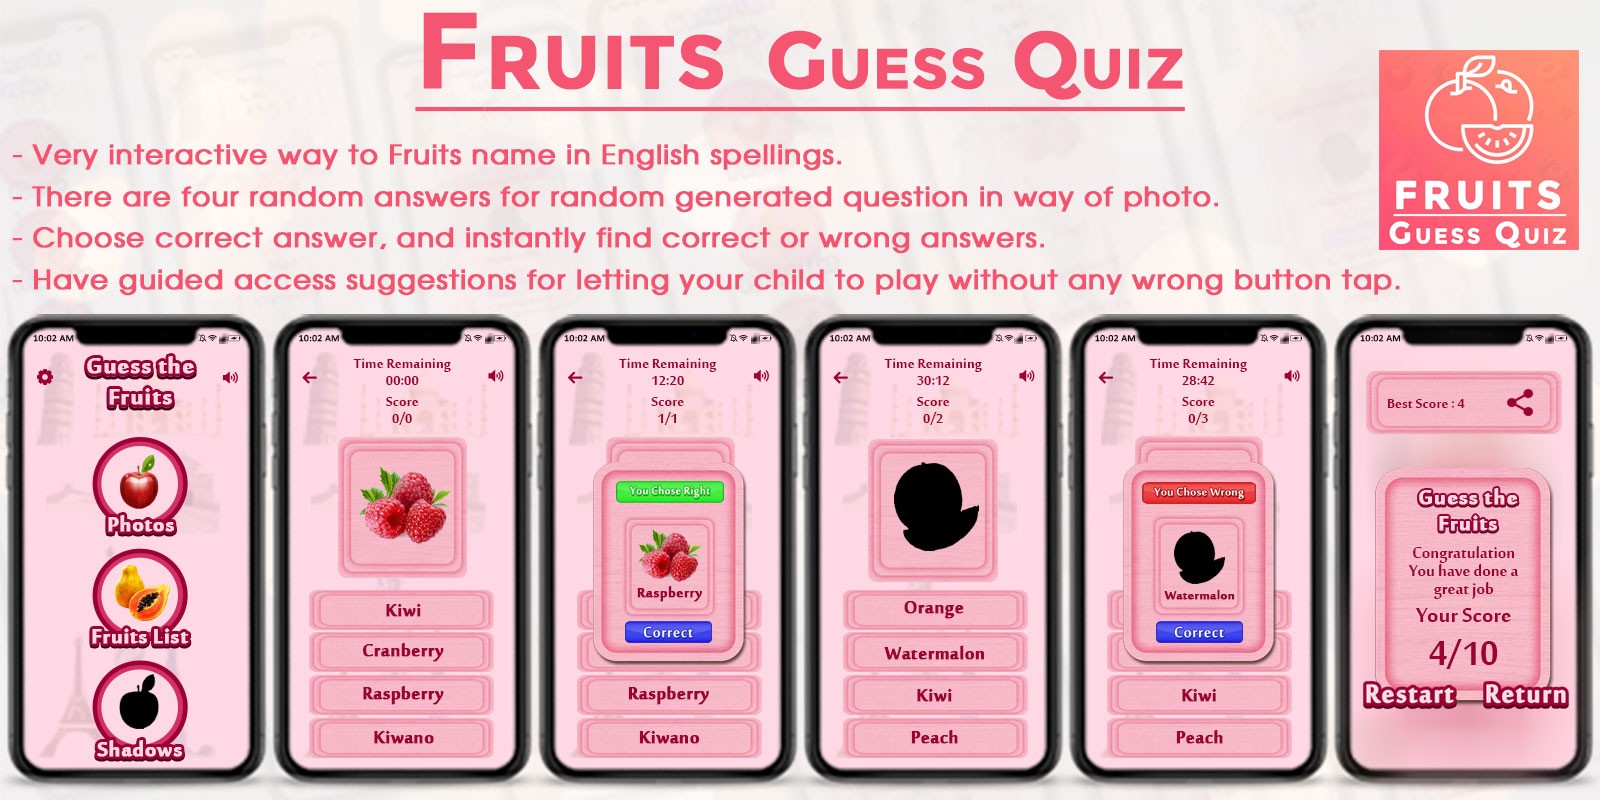 Fruits Quiz Guess iOS SWIFT.